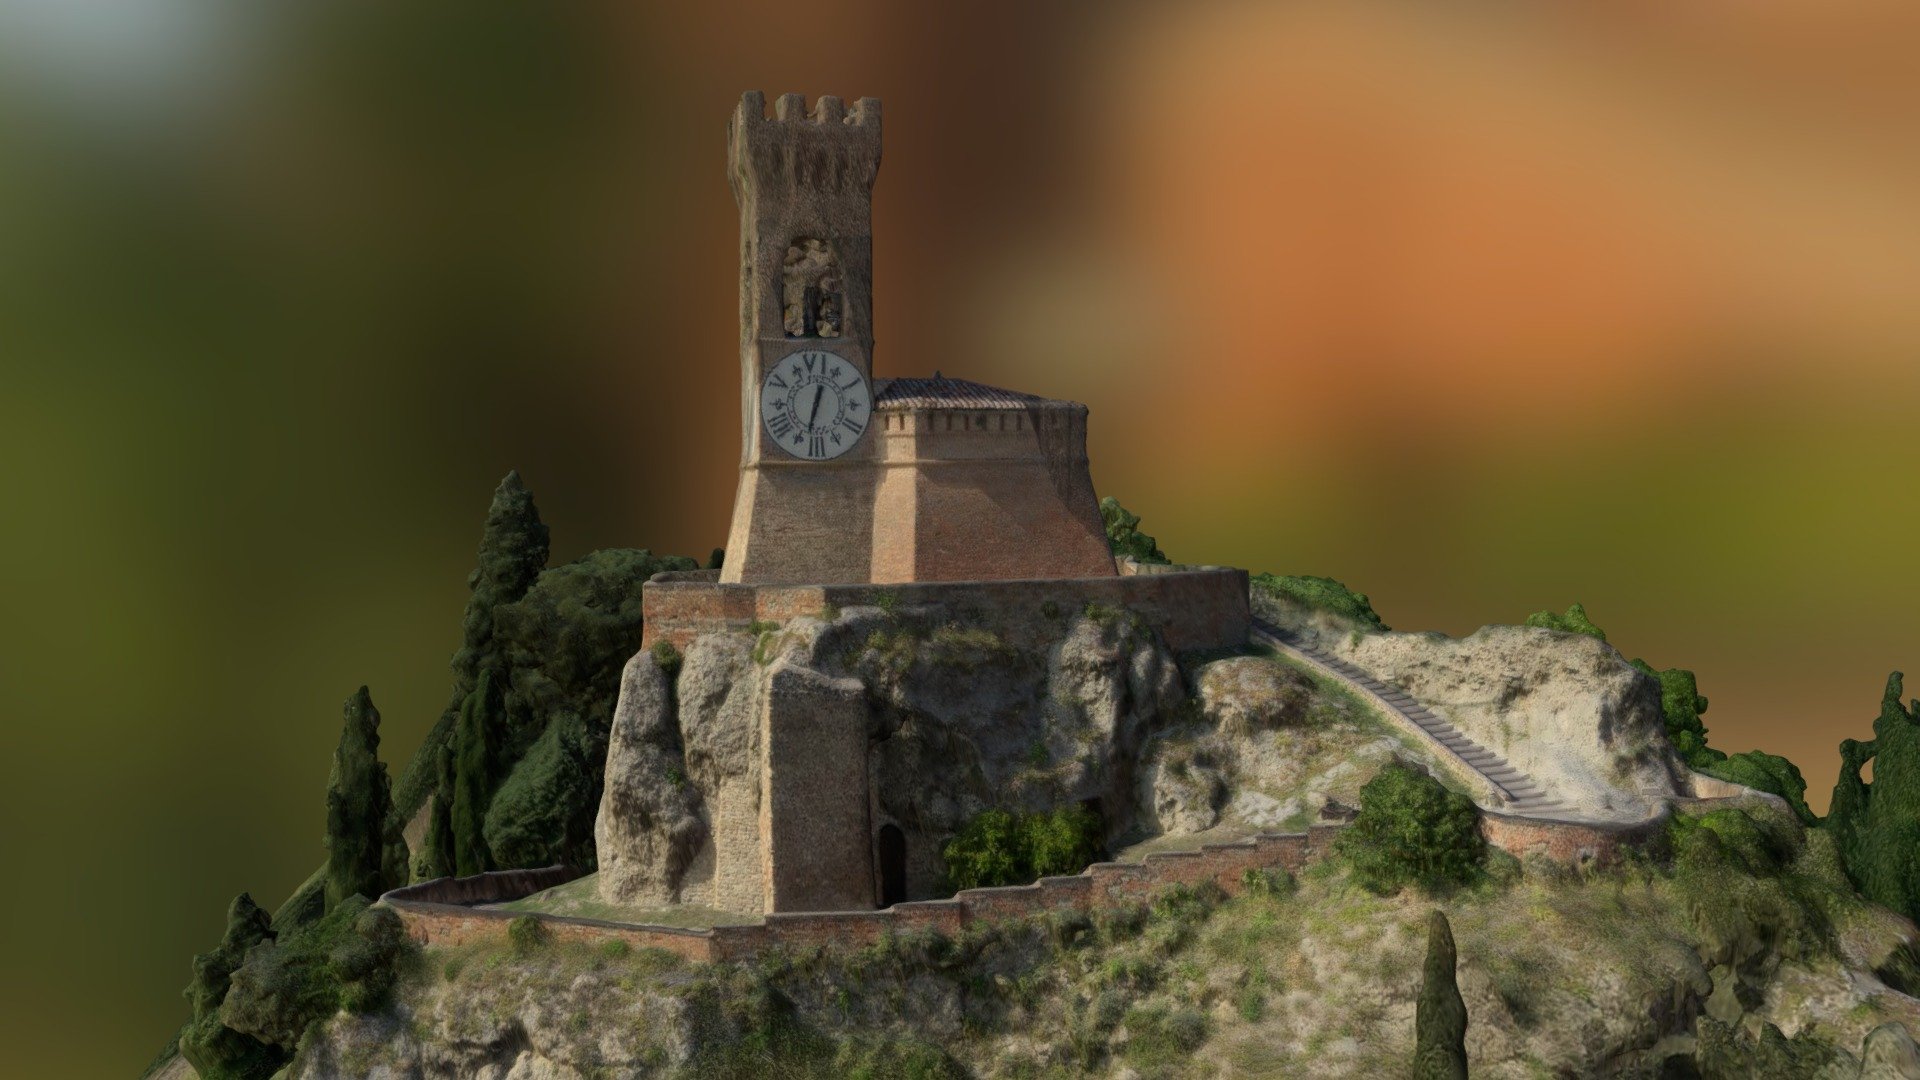 The Clock Tower of Brisighella